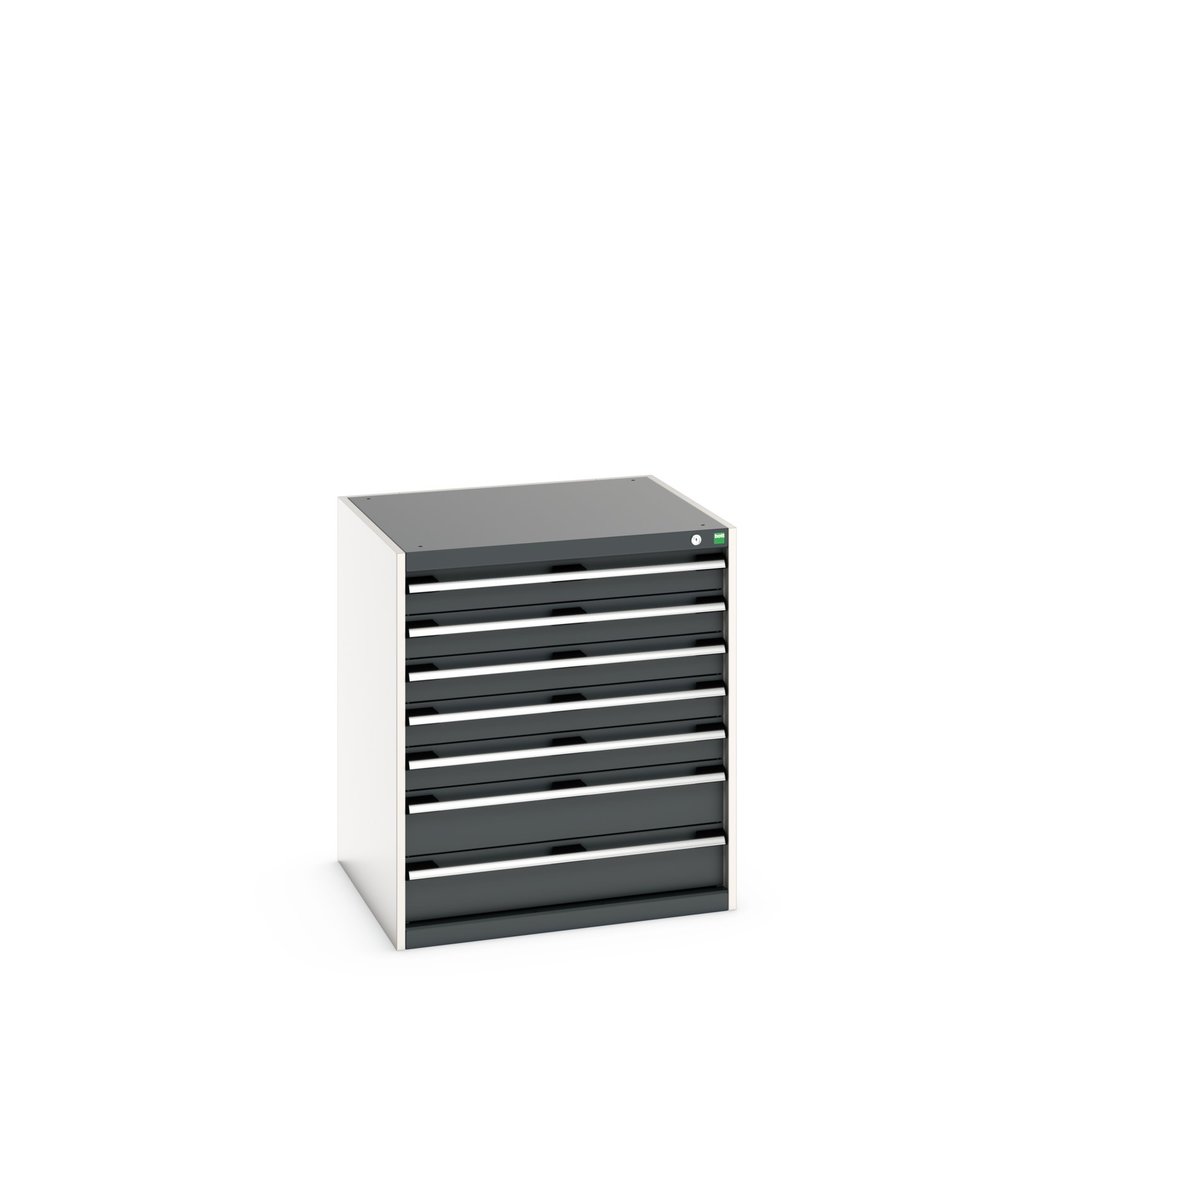 40028109. - cubio drawer cabinet